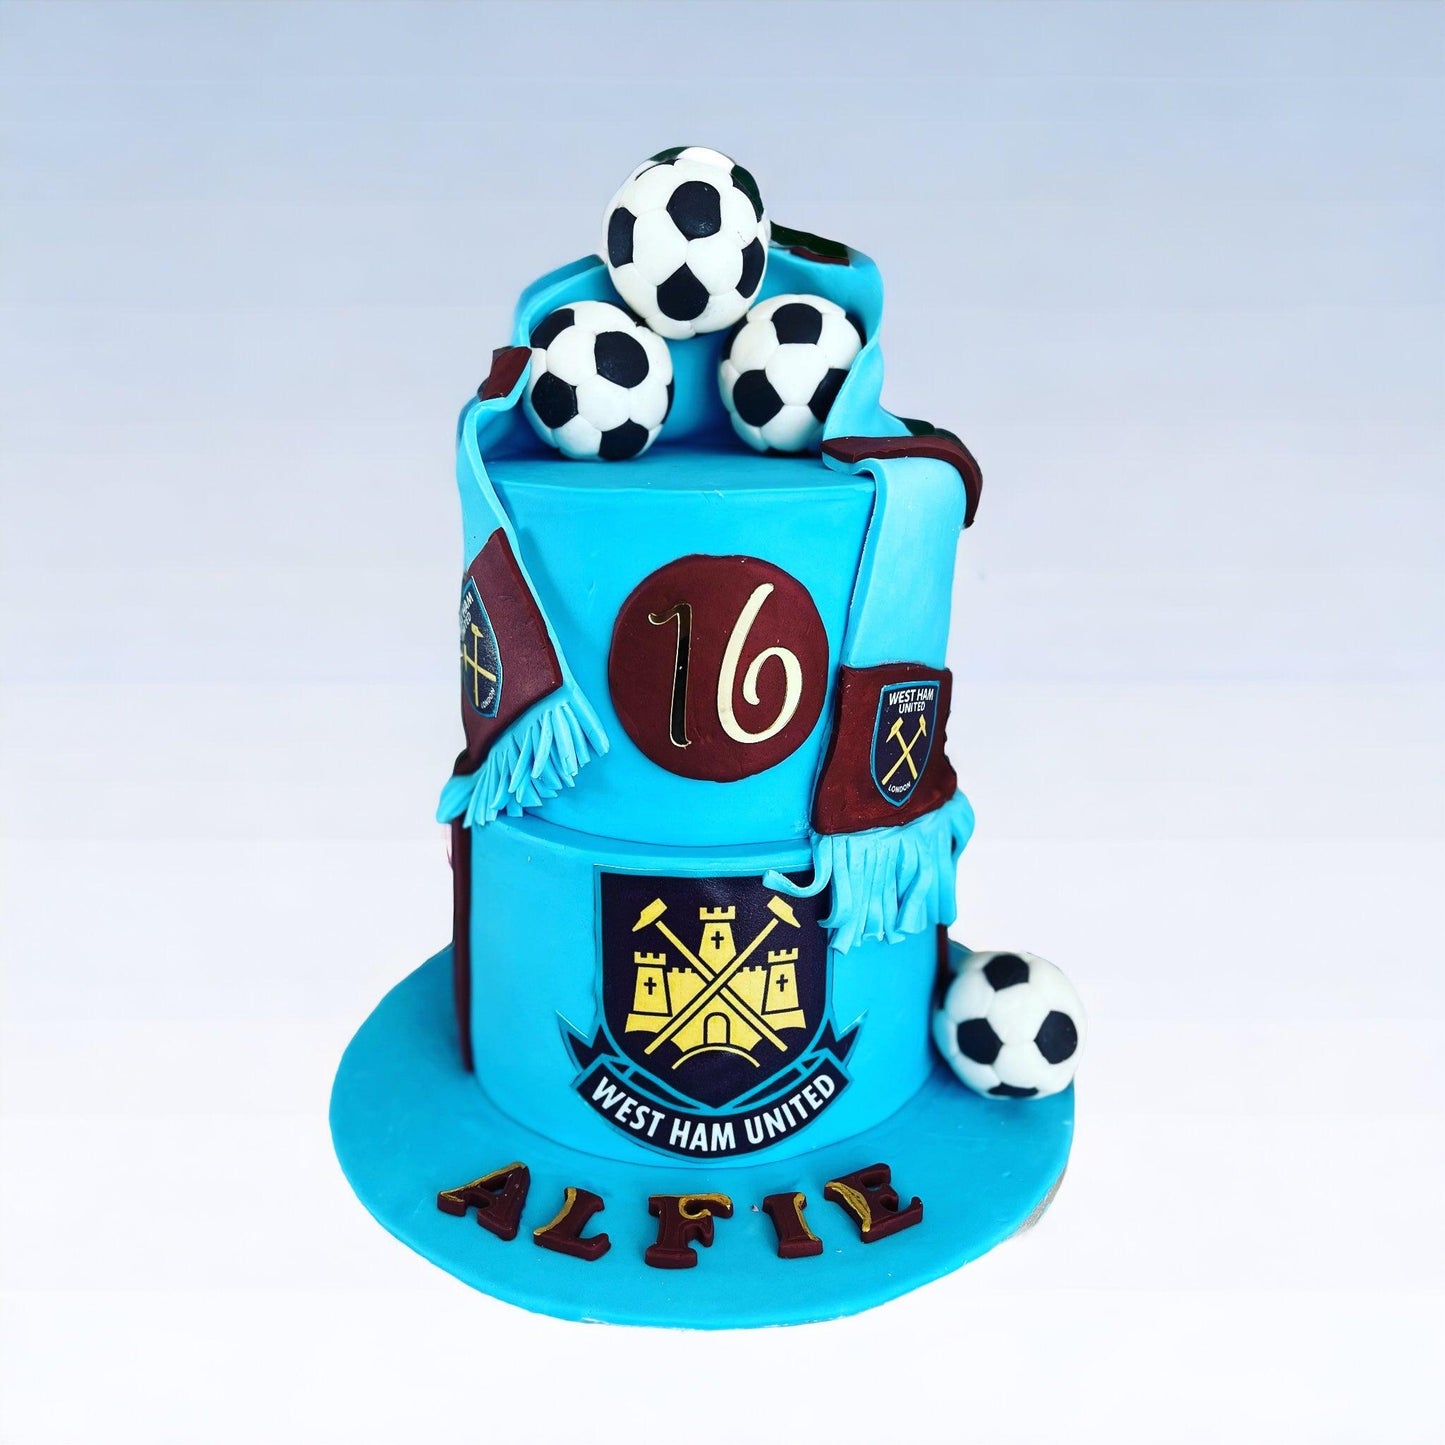 Football team birthday cake - Naturally_deliciousss